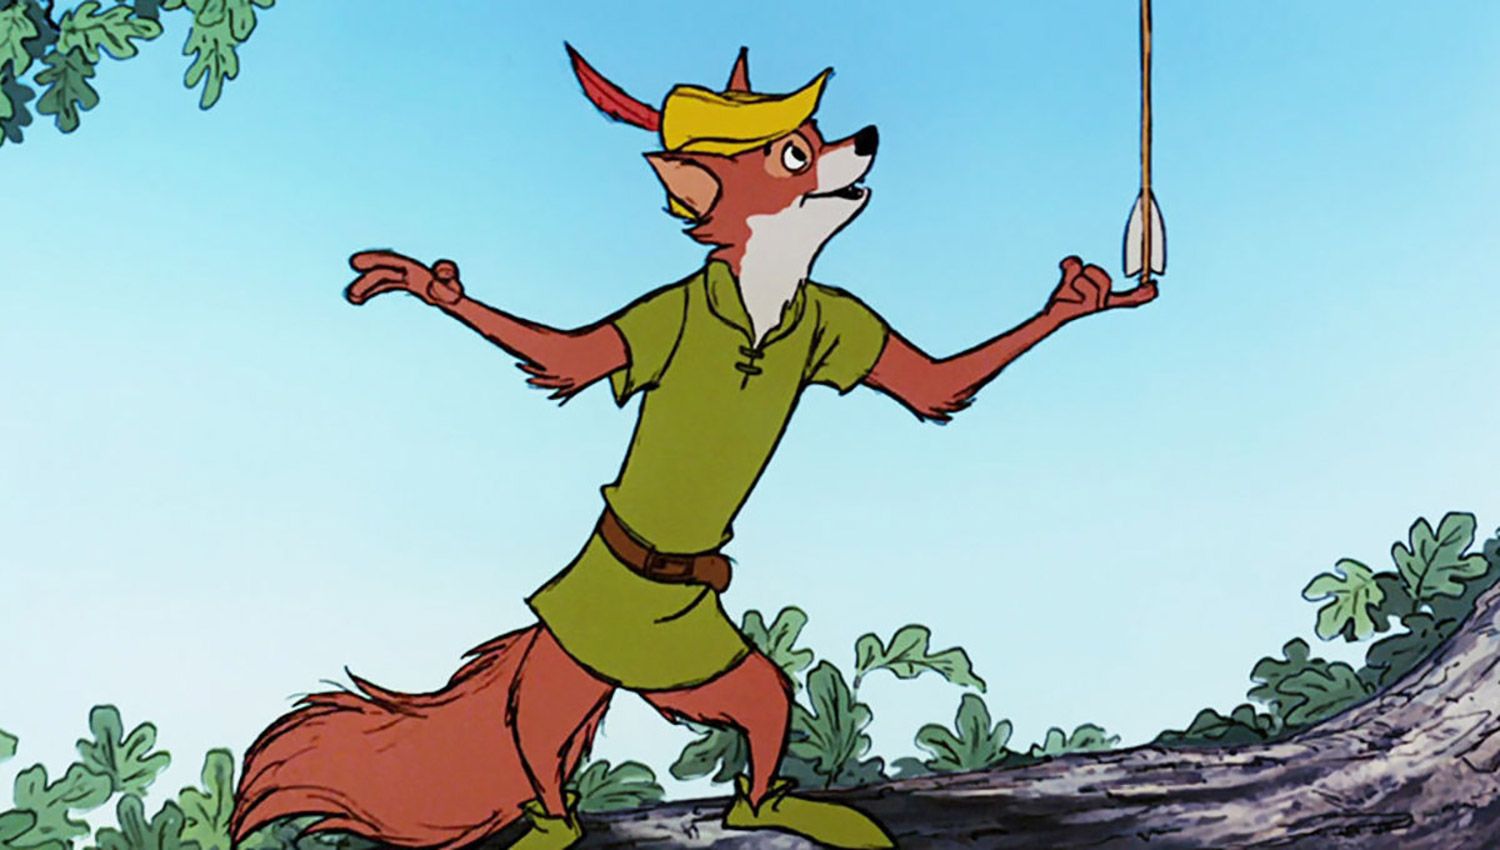 Disney’s 'Robin Hood' Getting A Live Action CG Remake